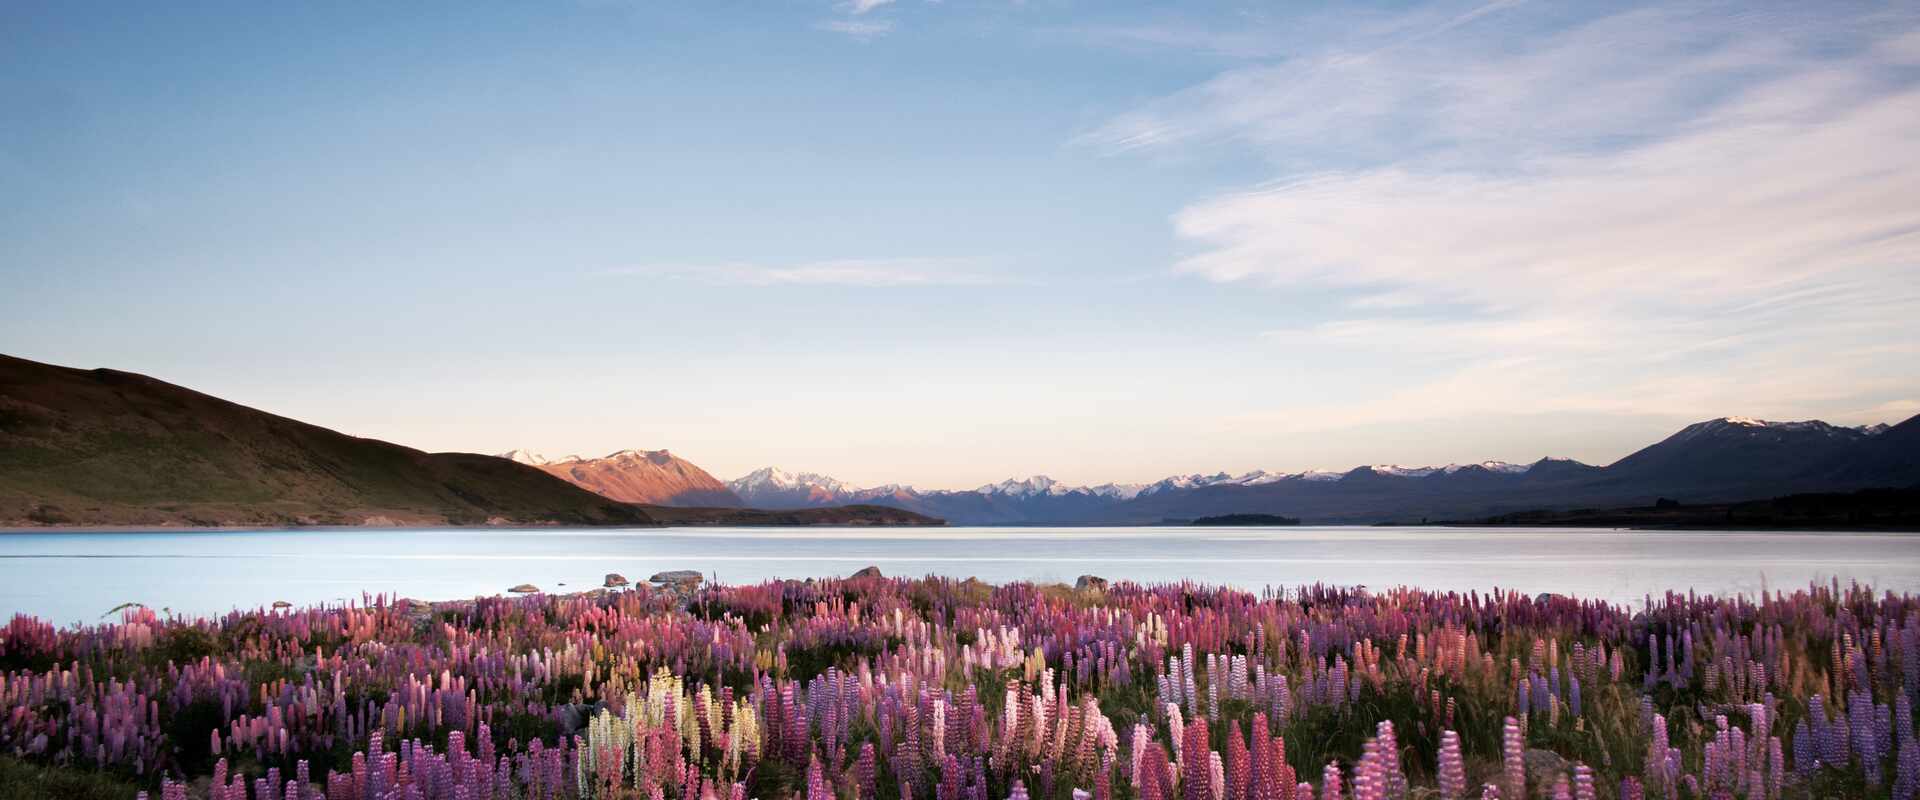 Lupins Flowers at Lake Takapo, South Island New Zealand